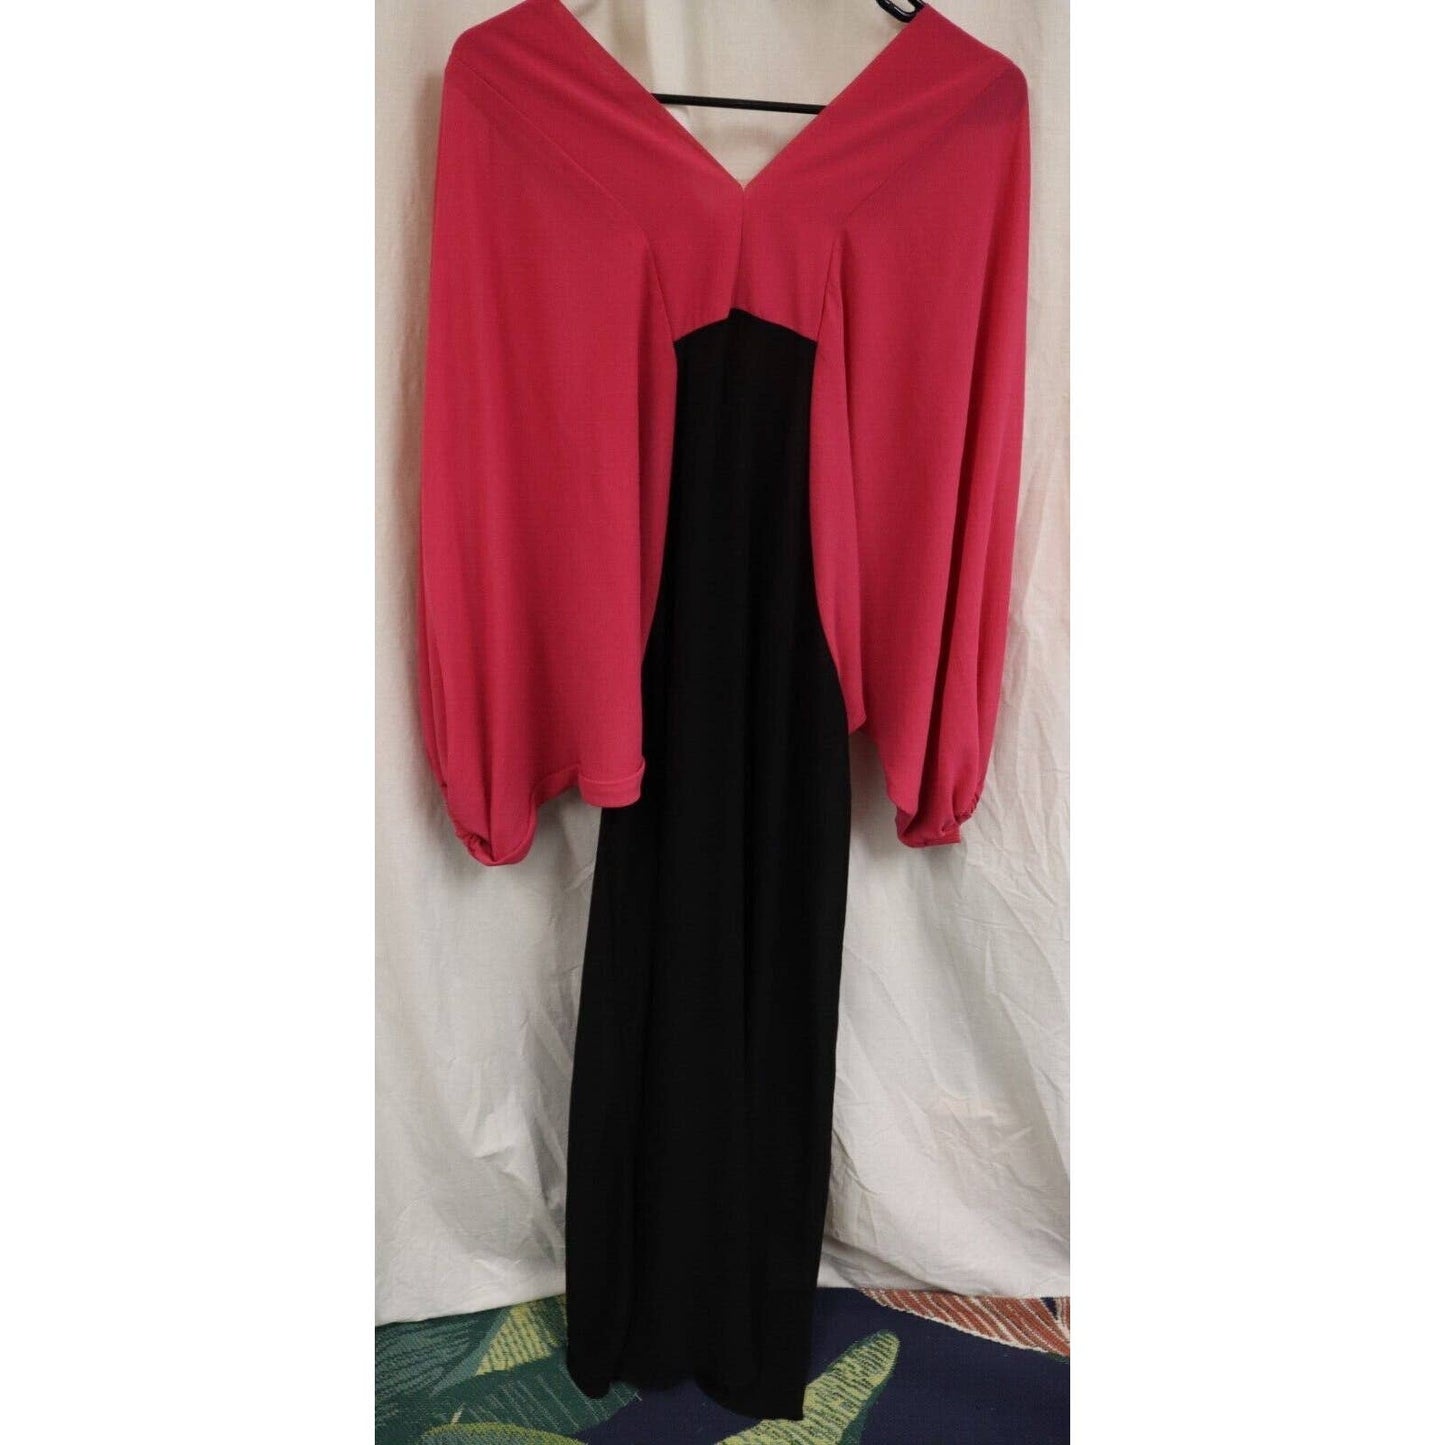 Black and Pink Abaya Batwing Maxi Sheer Light Weight Long Dress (H)